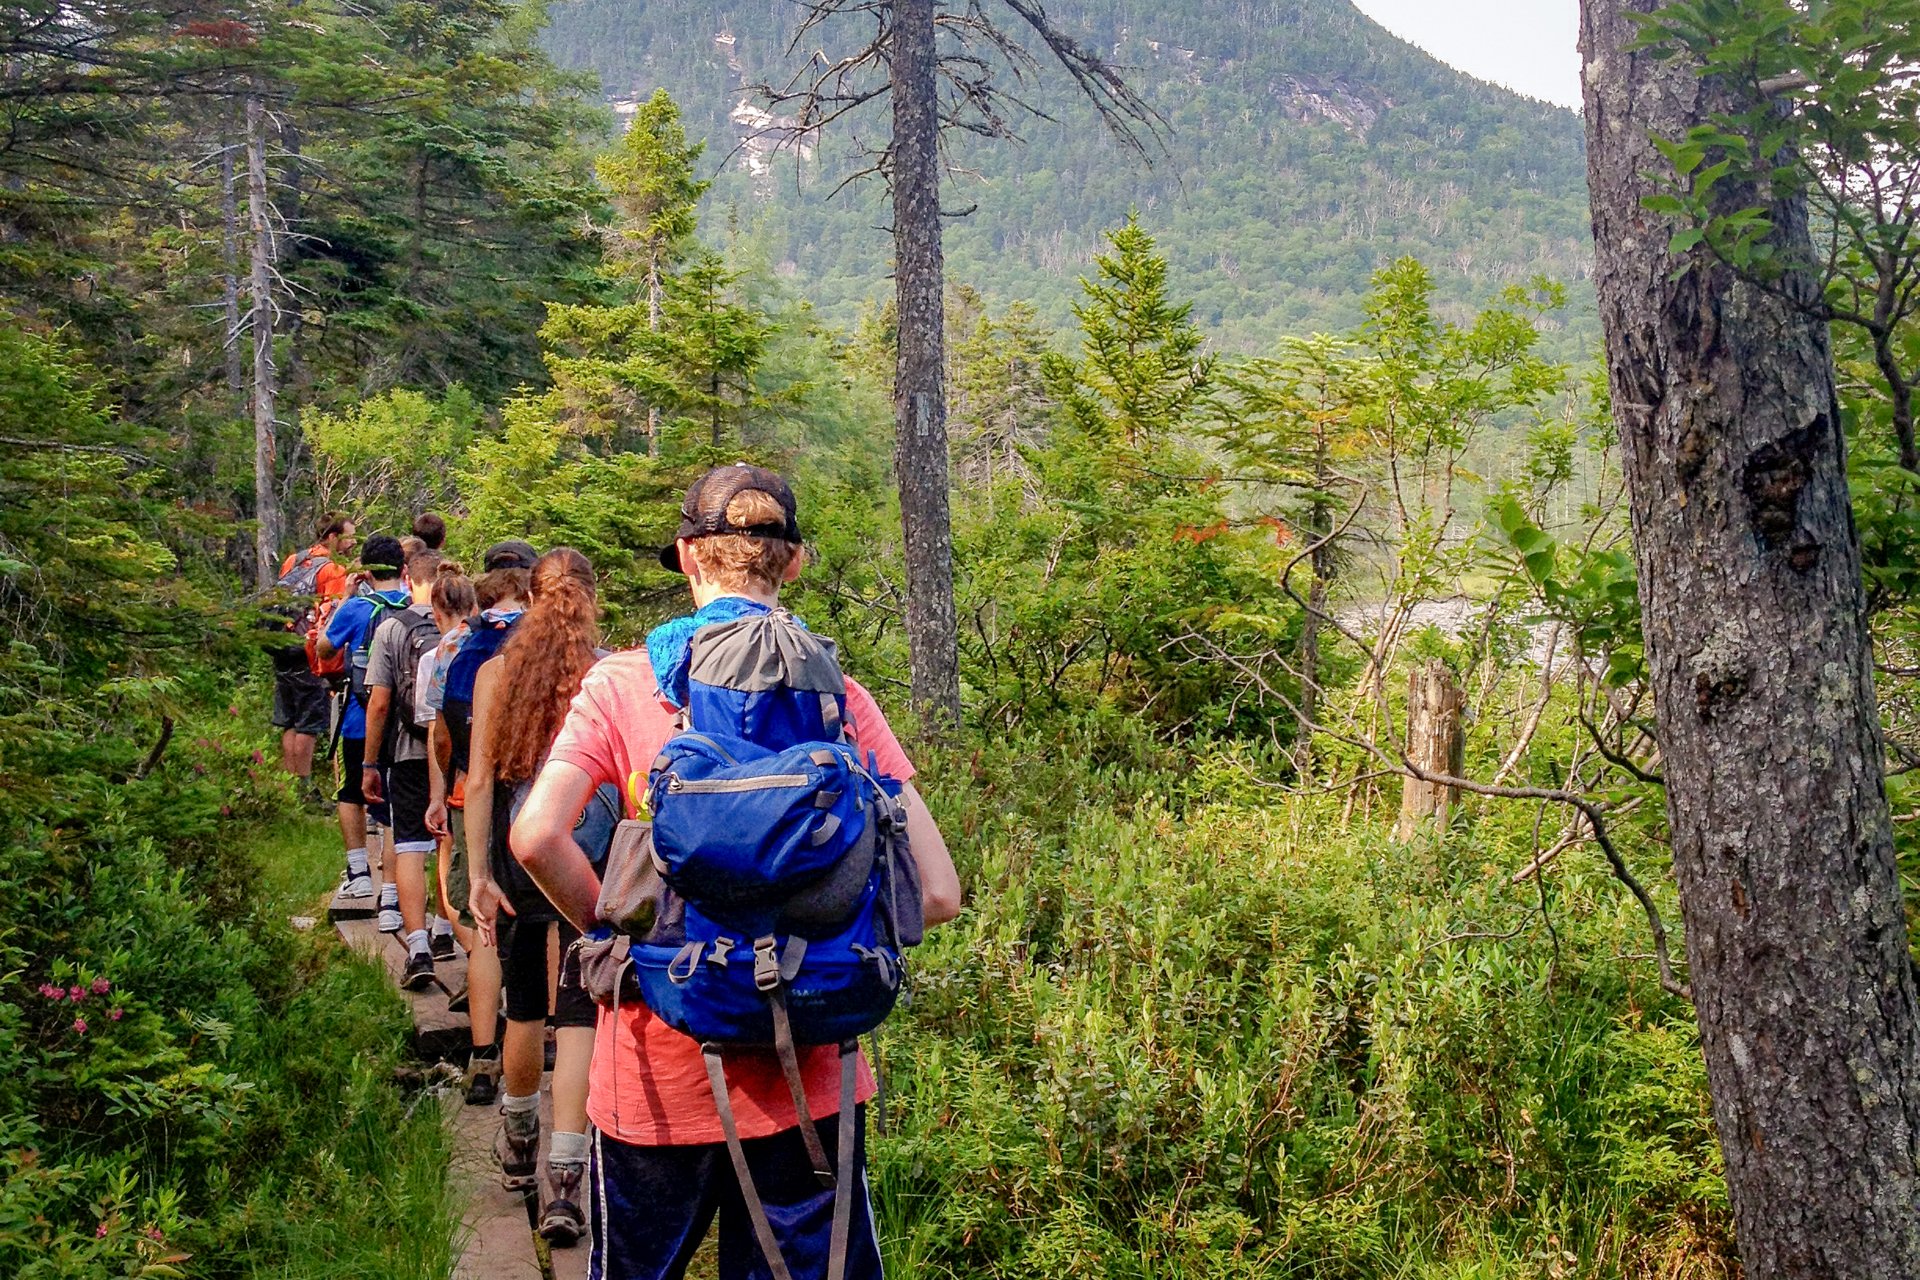 A group of teen trekkers walking away along a narrow boardwalk through green wetlands toward a mountain summit in the background